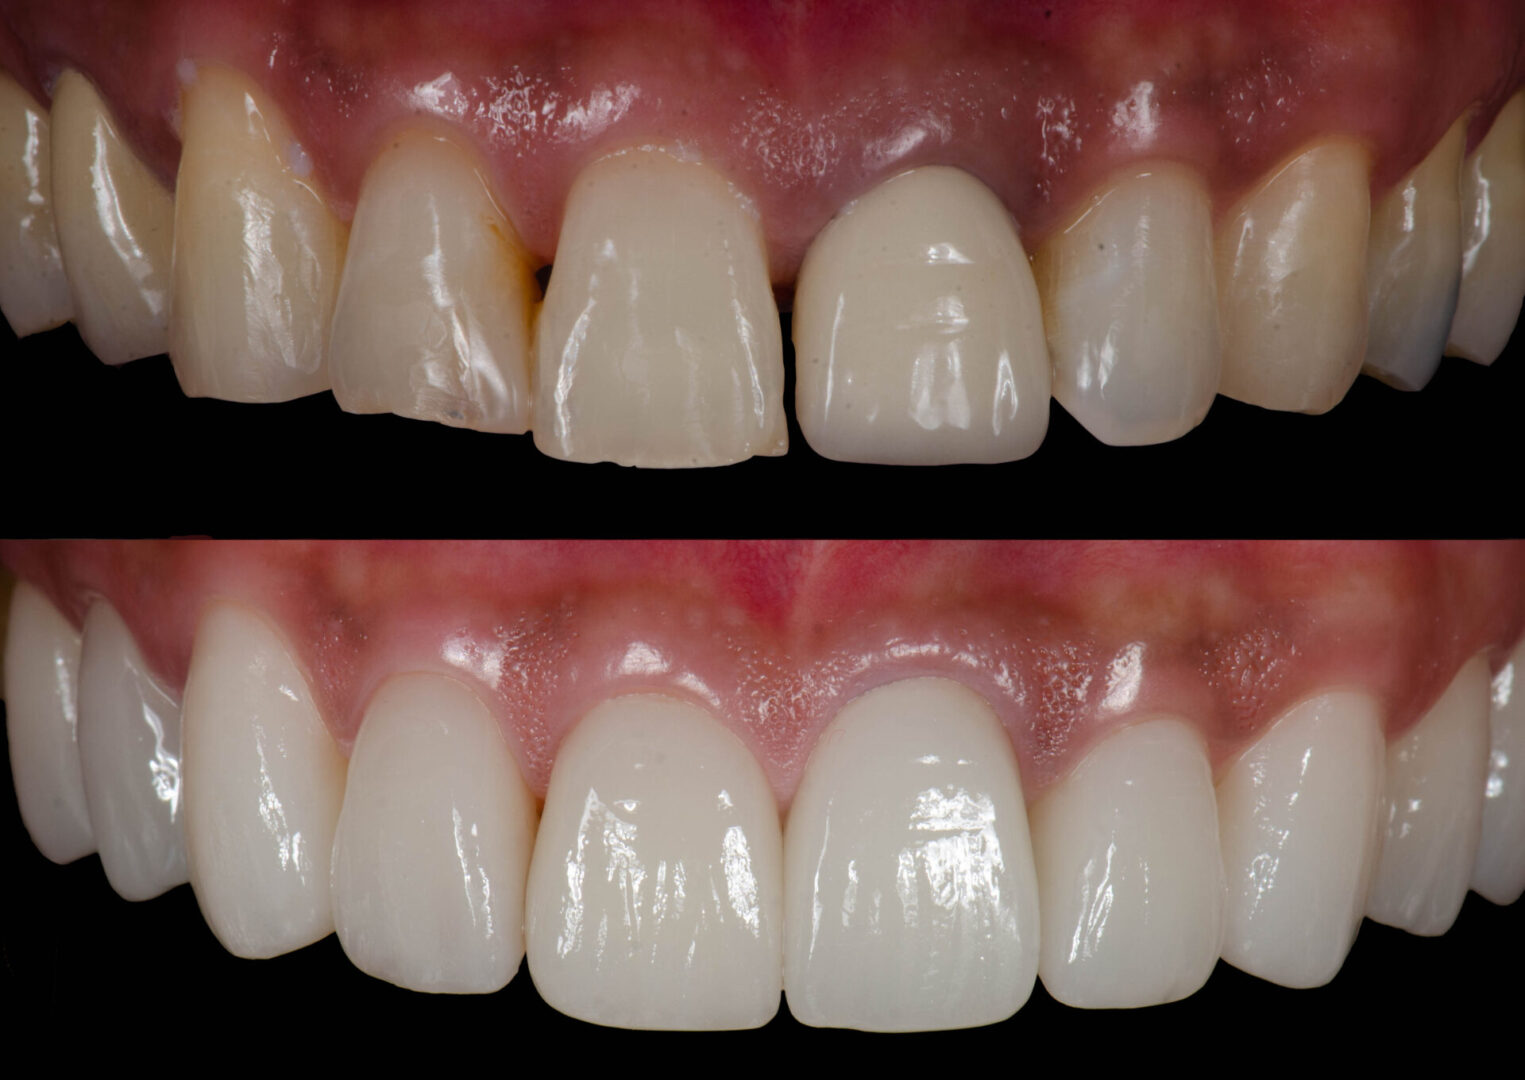 Before and After Dental smile makeover